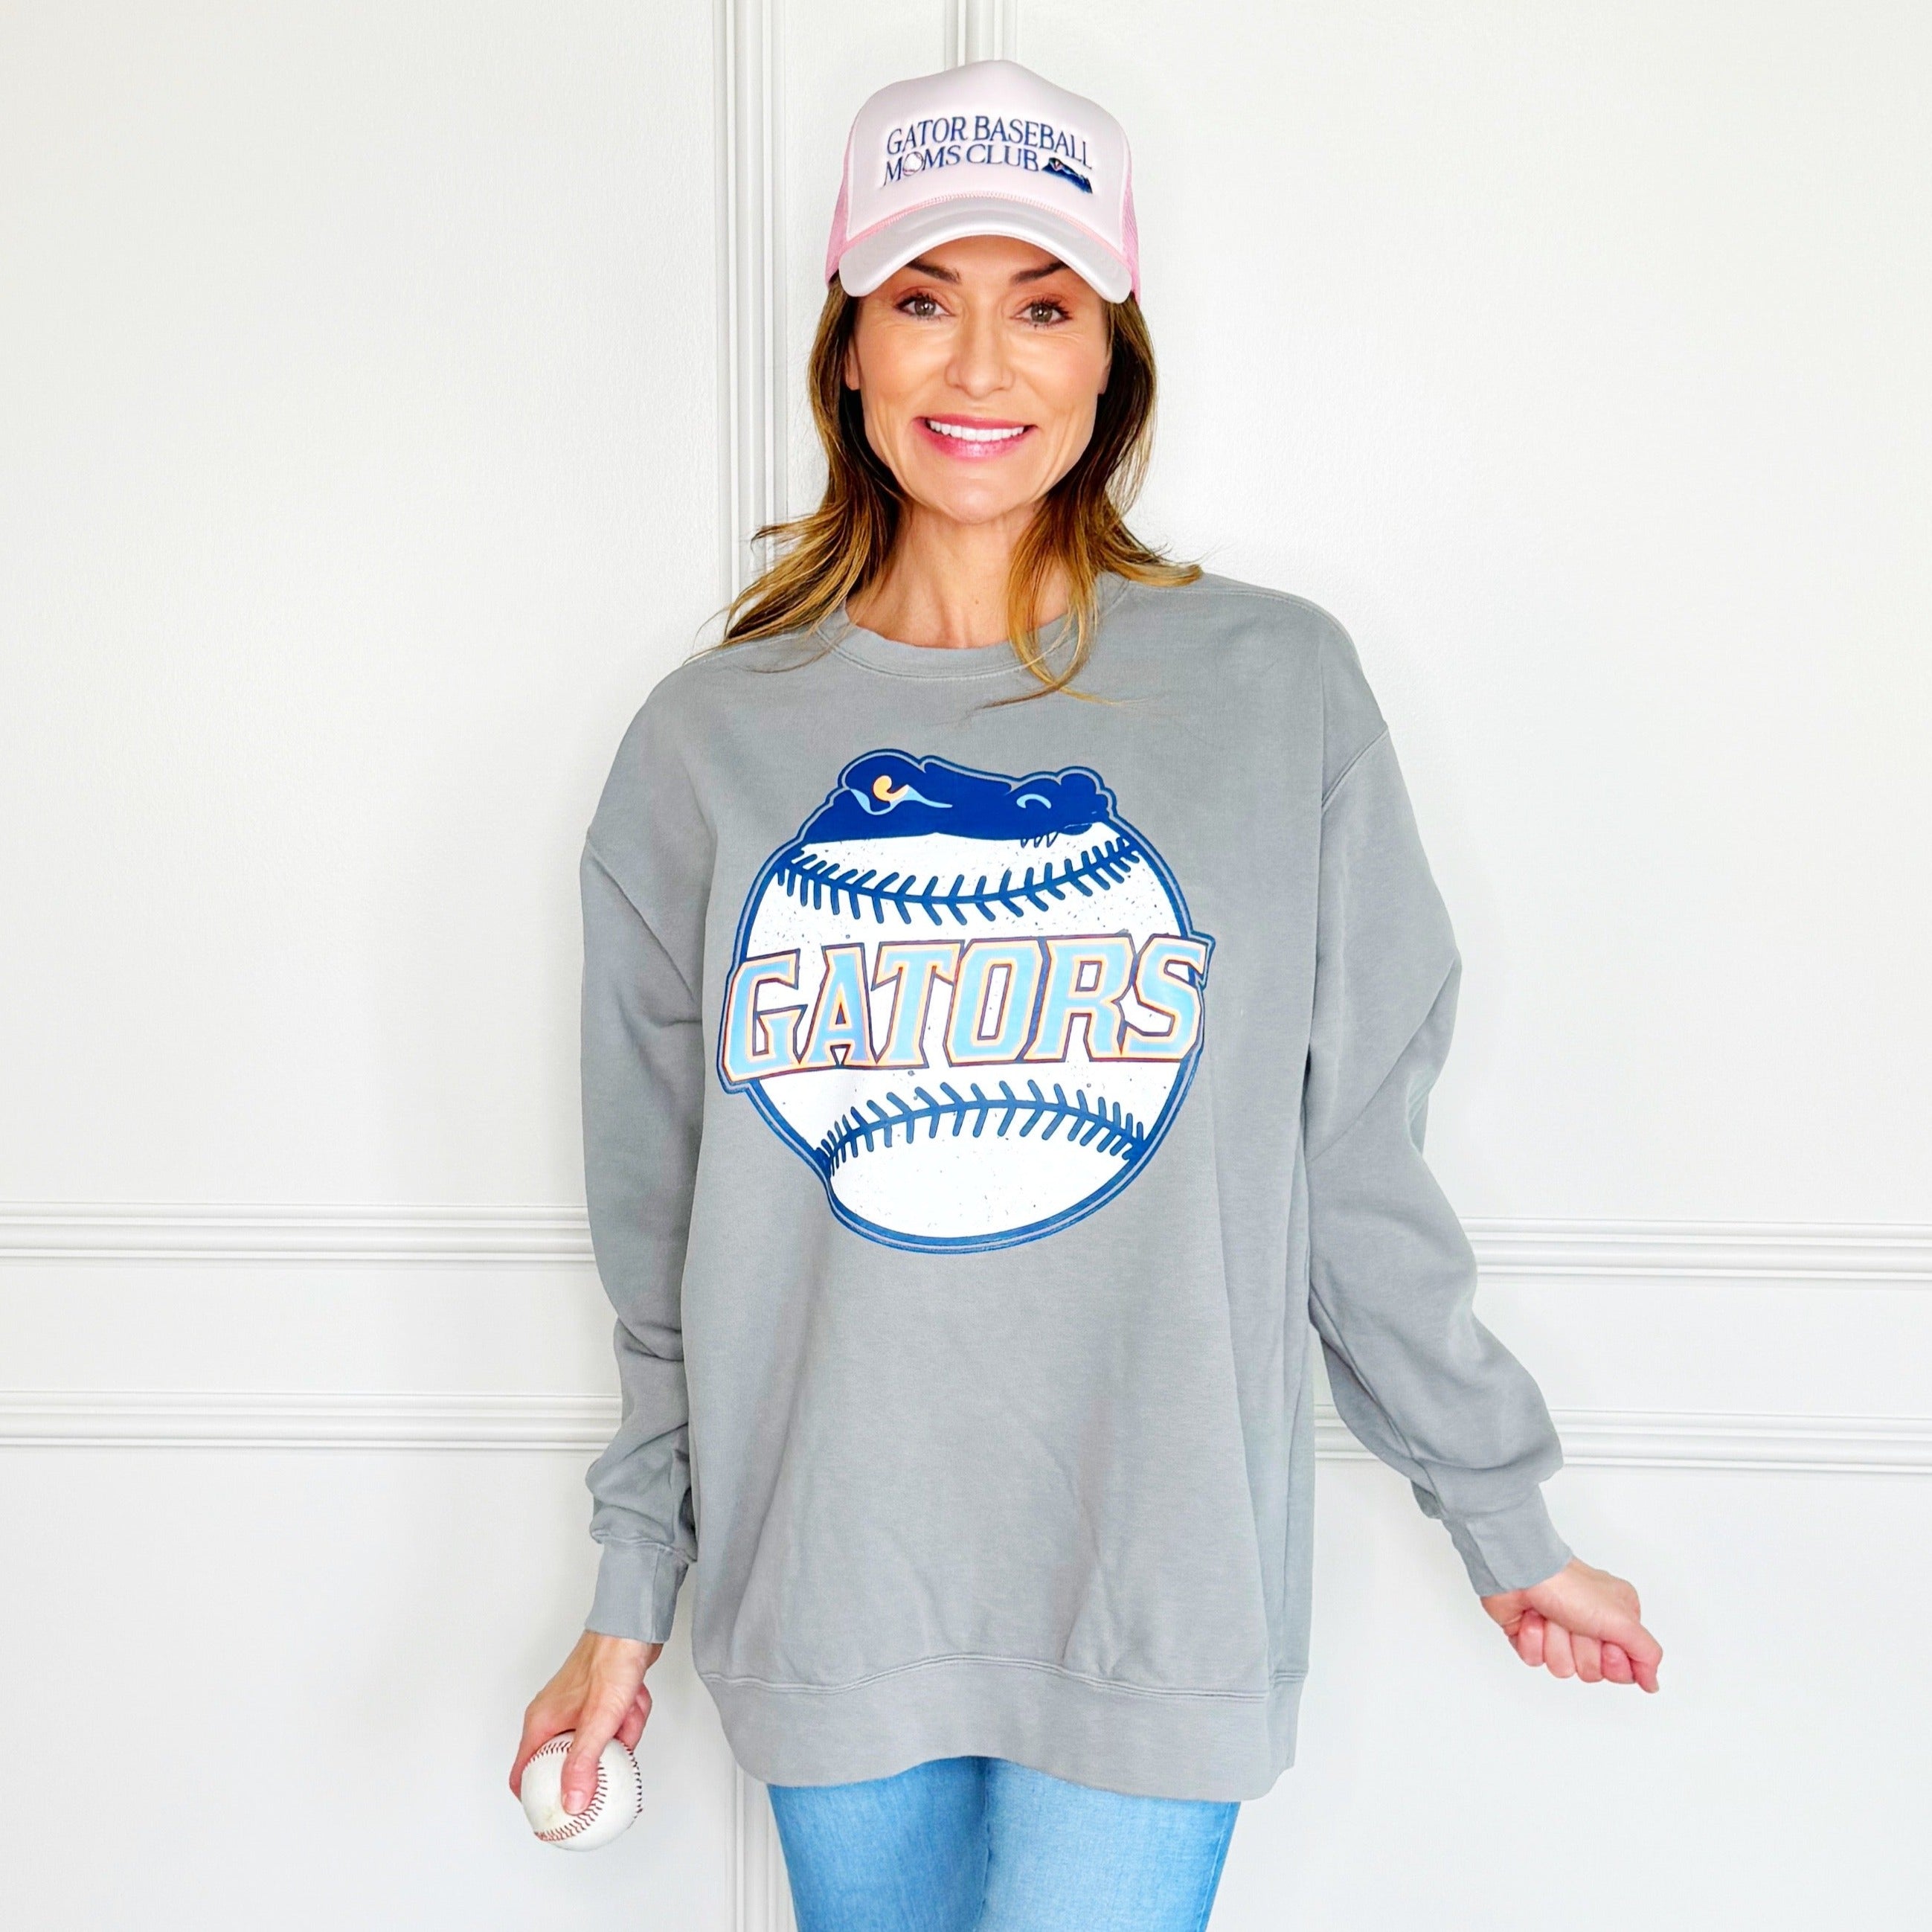 Puff Gators Baseball Sweatshirt